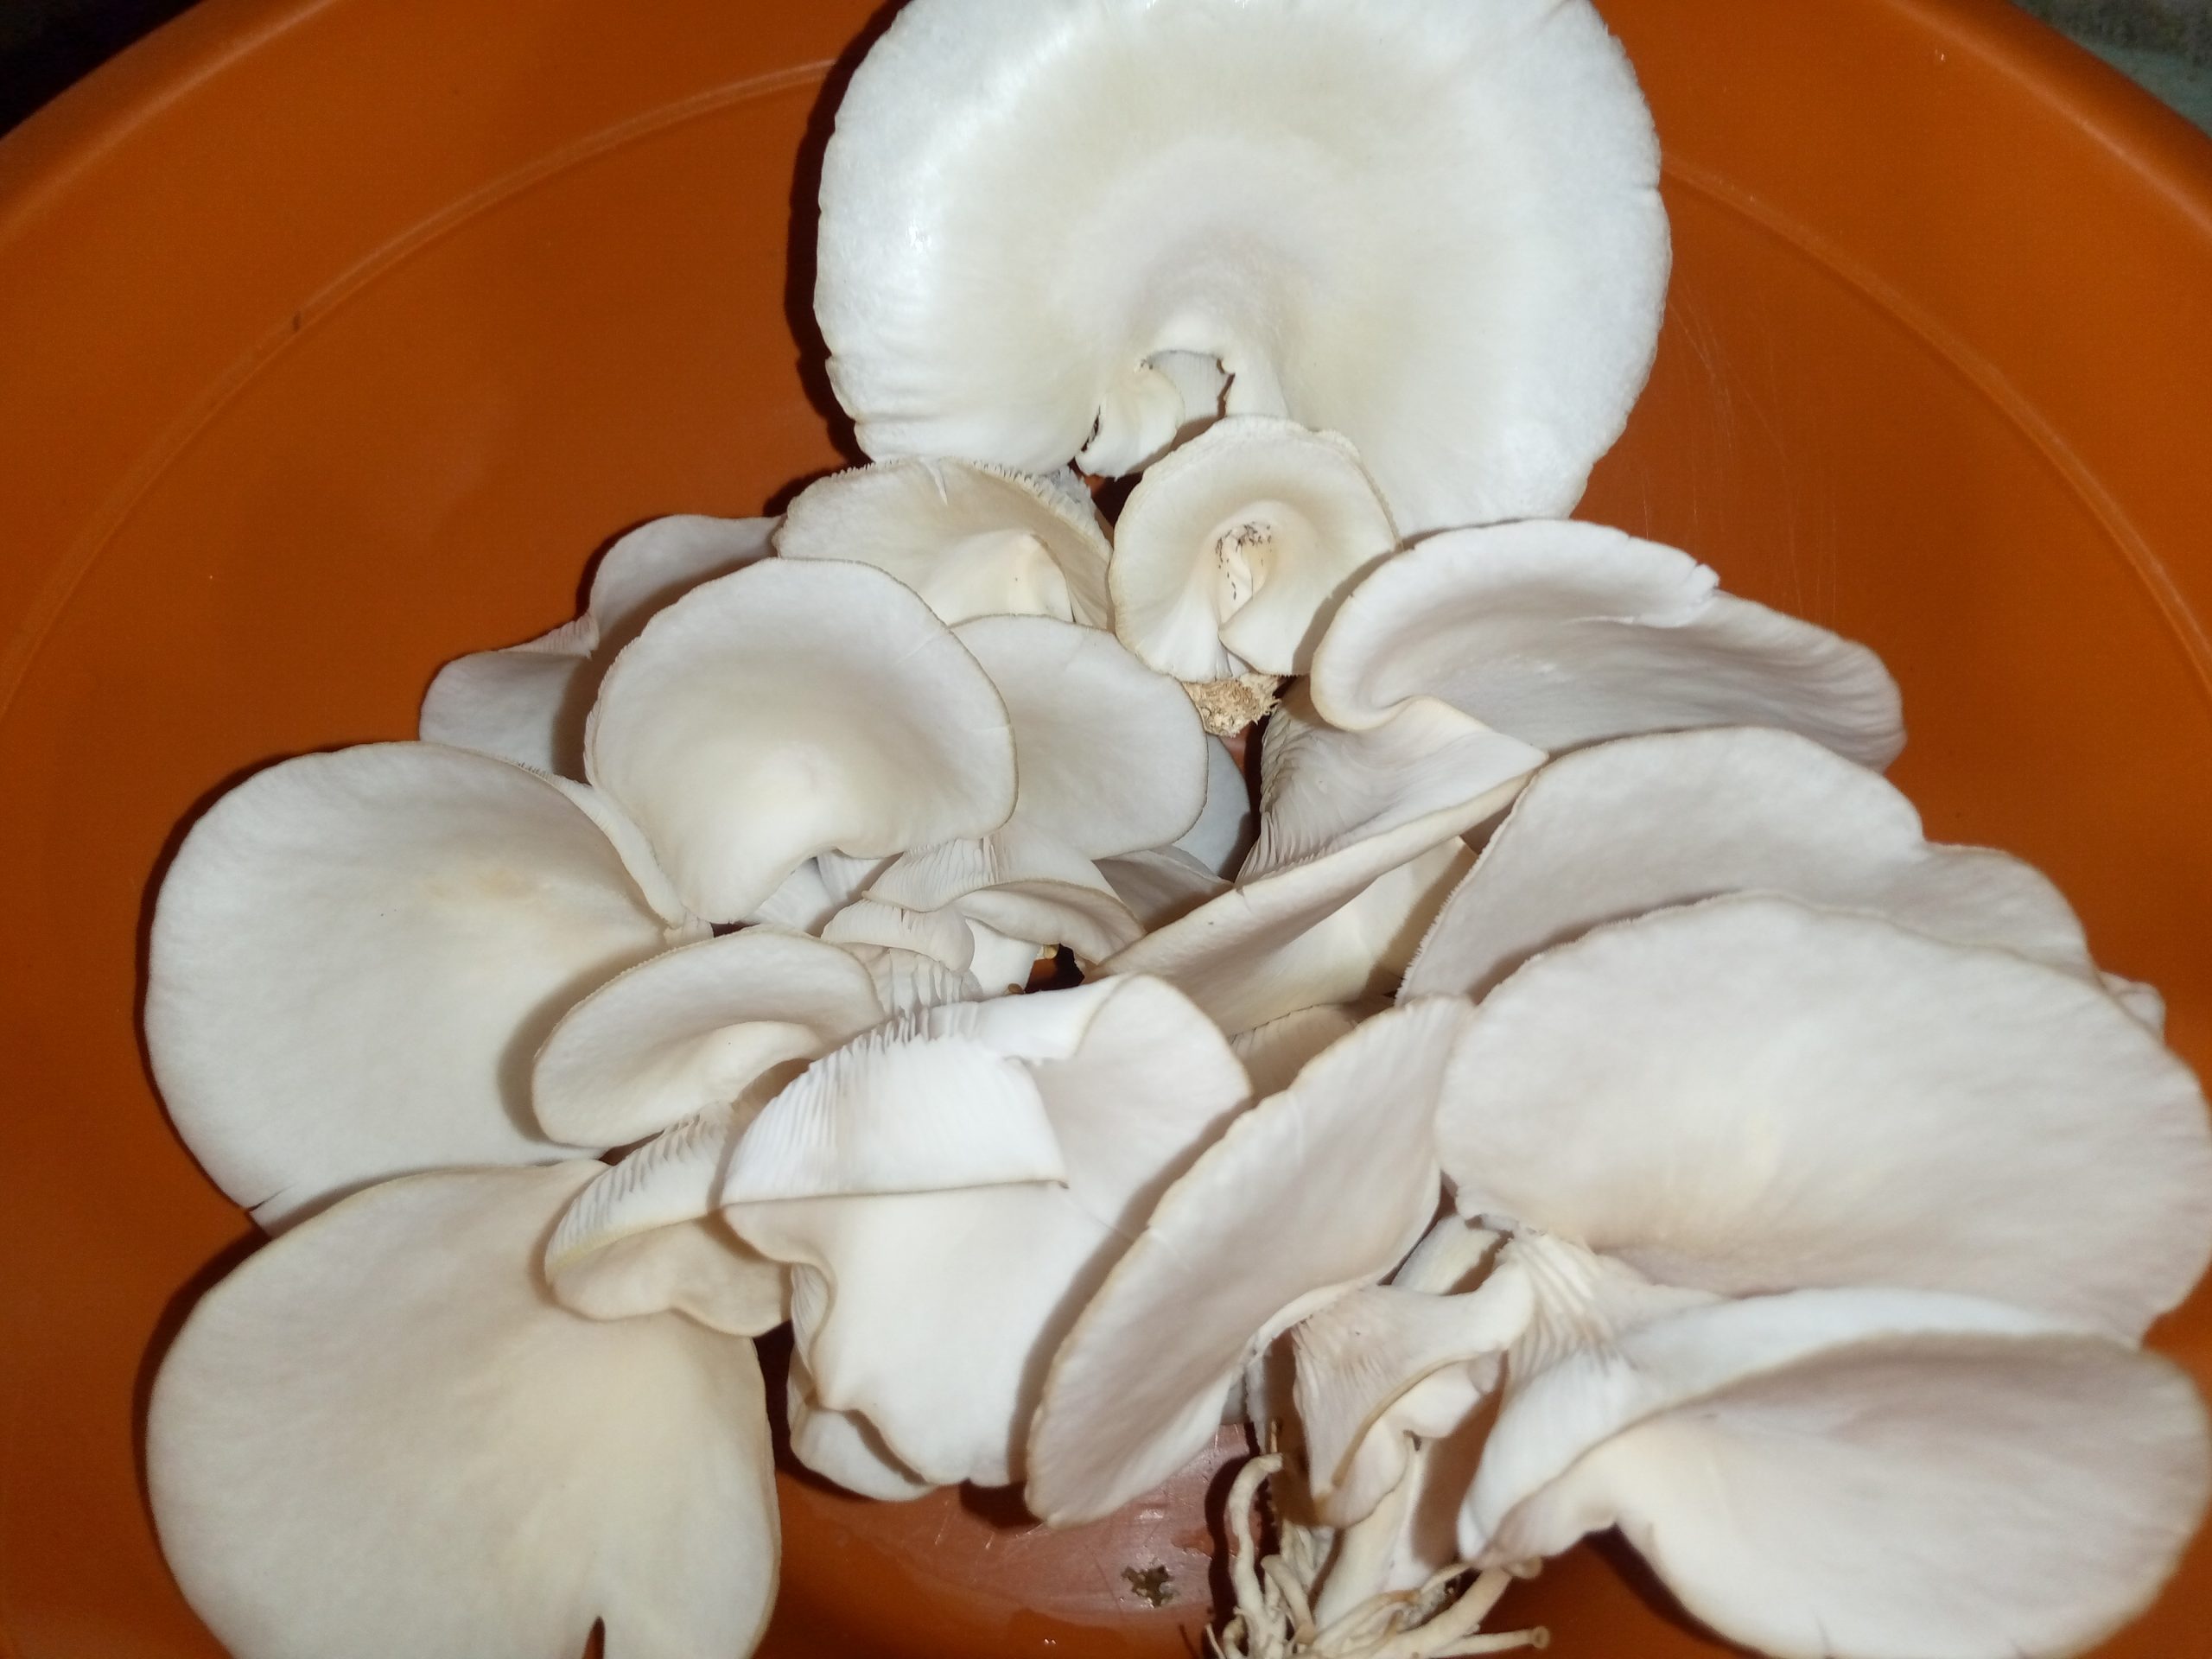 Oyster mushrooms harvest